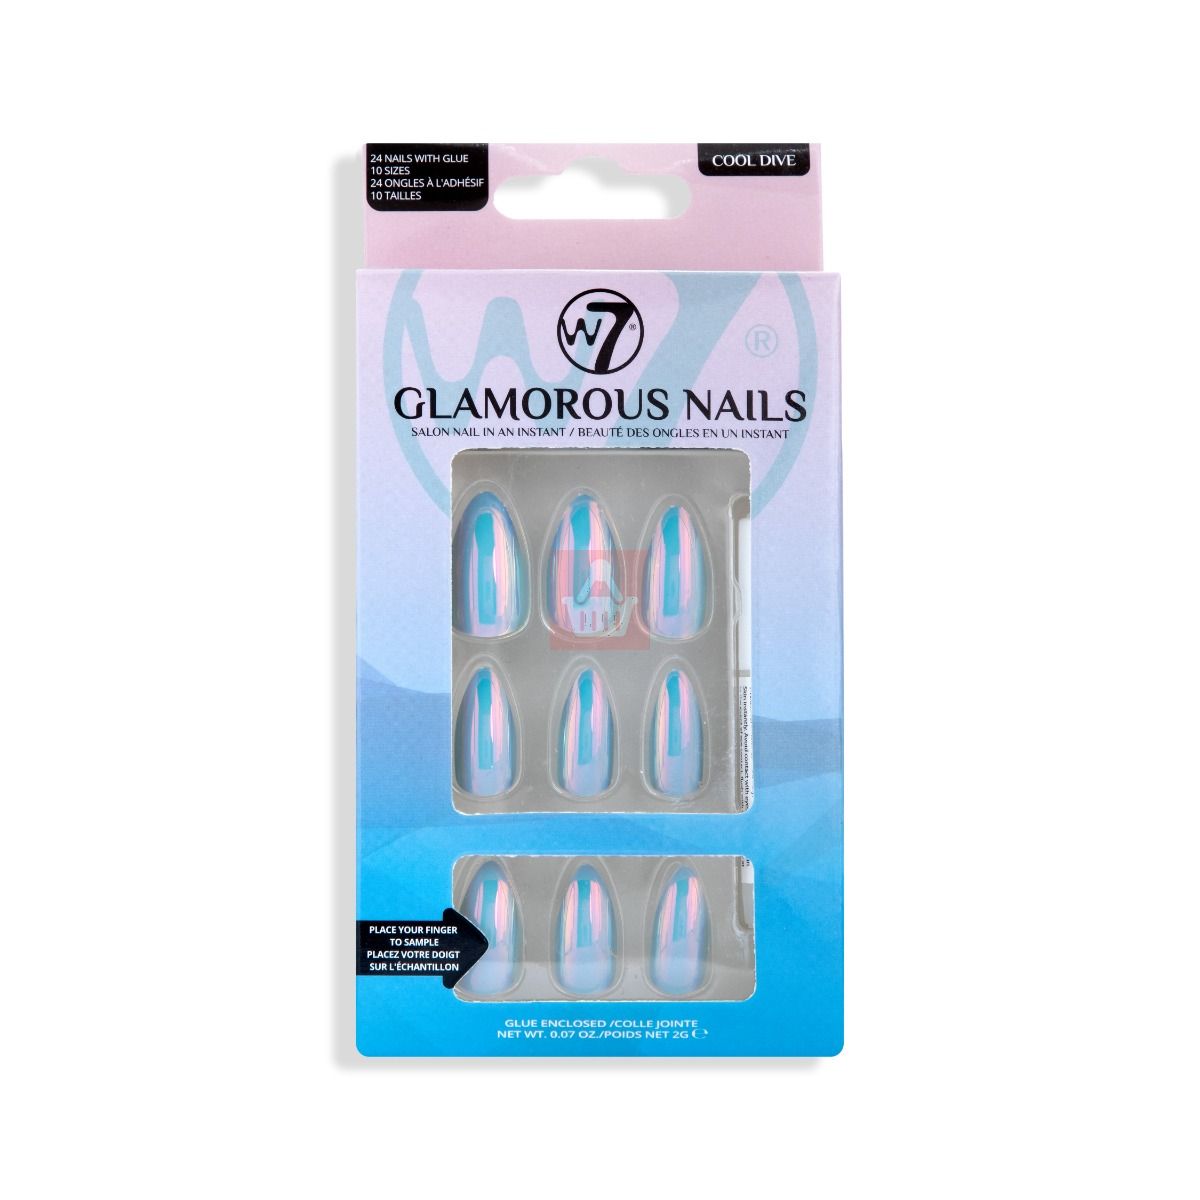 W7 Glamorous False Nails With Glue Cool Dive 24 Pcs